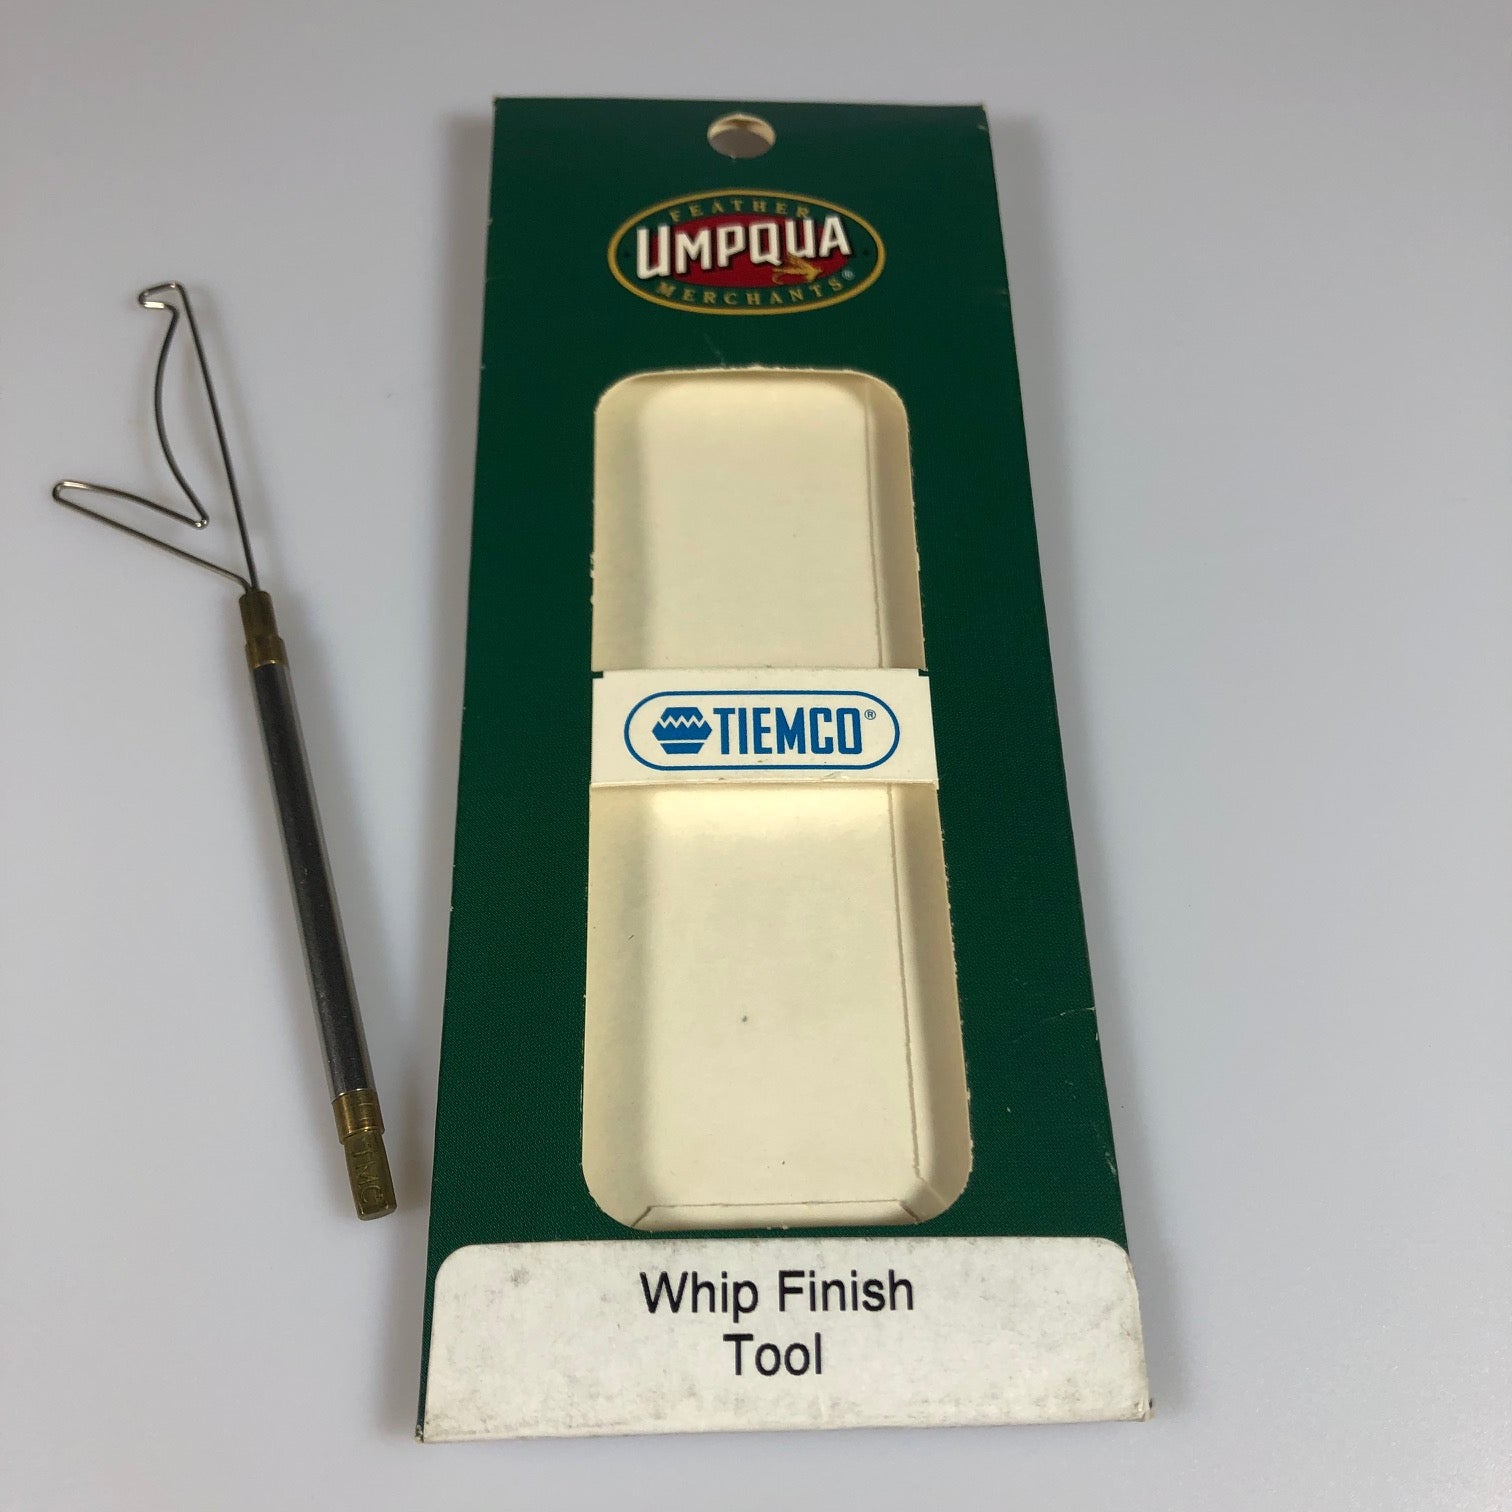 Umpqua (Tiemco) Whip Finish Tool